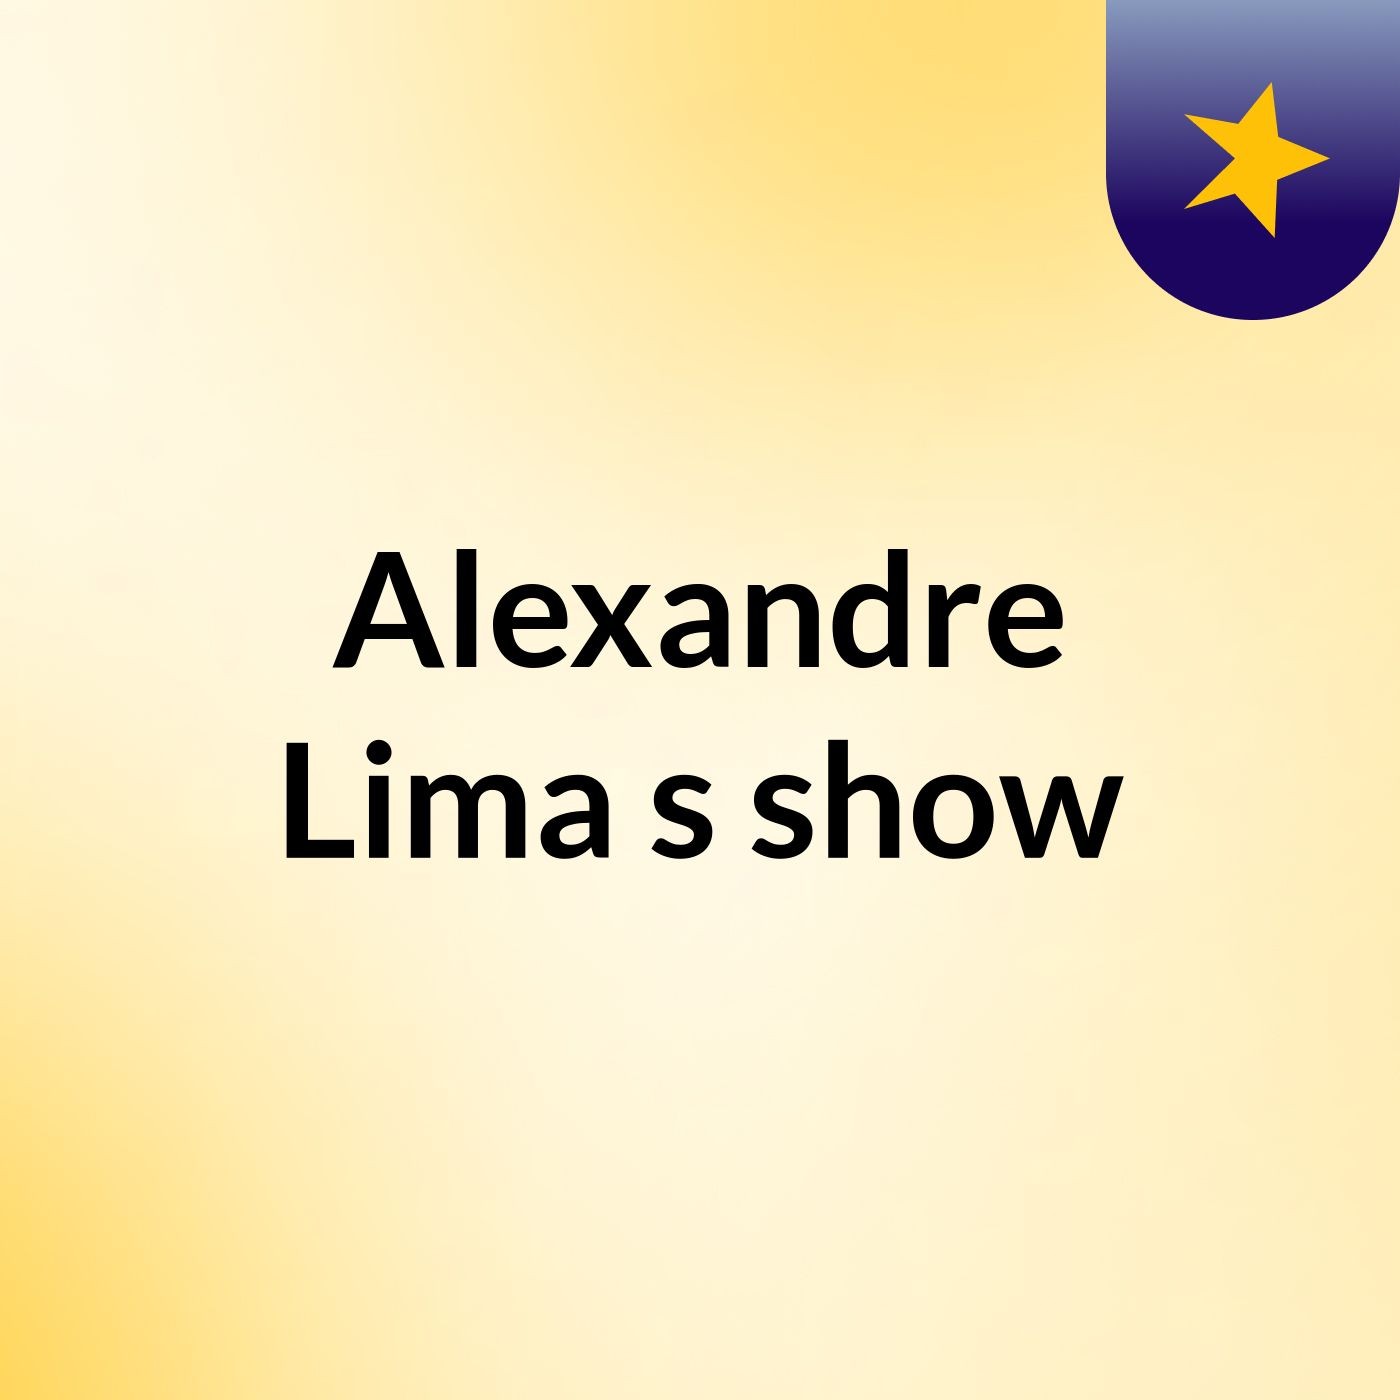 Alexandre Lima's show